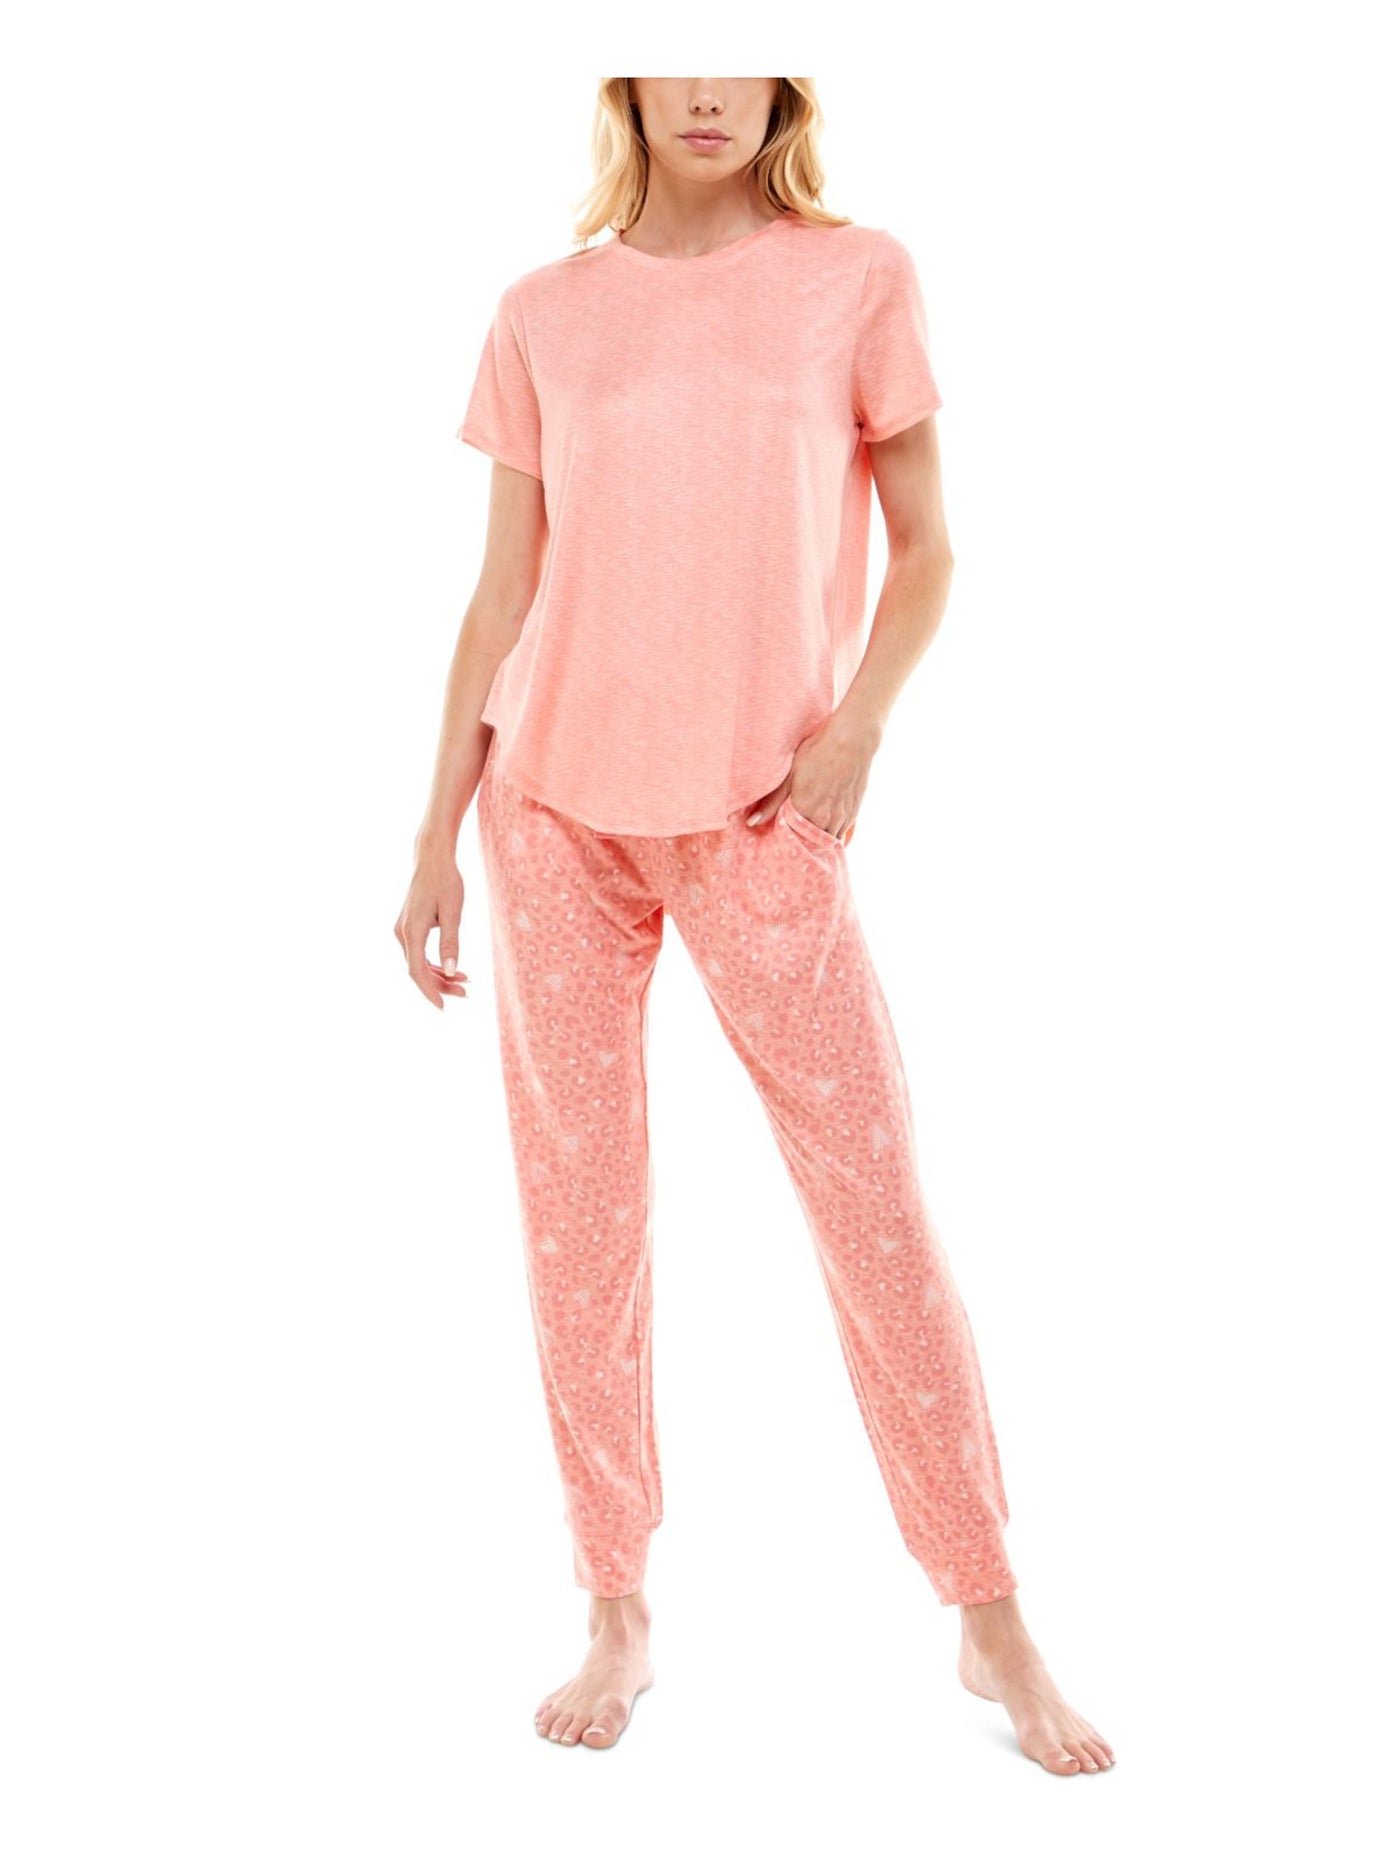 ROUDELAIN Intimates Pink Shirttail Hem Sleep Shirt Pajama Top XL